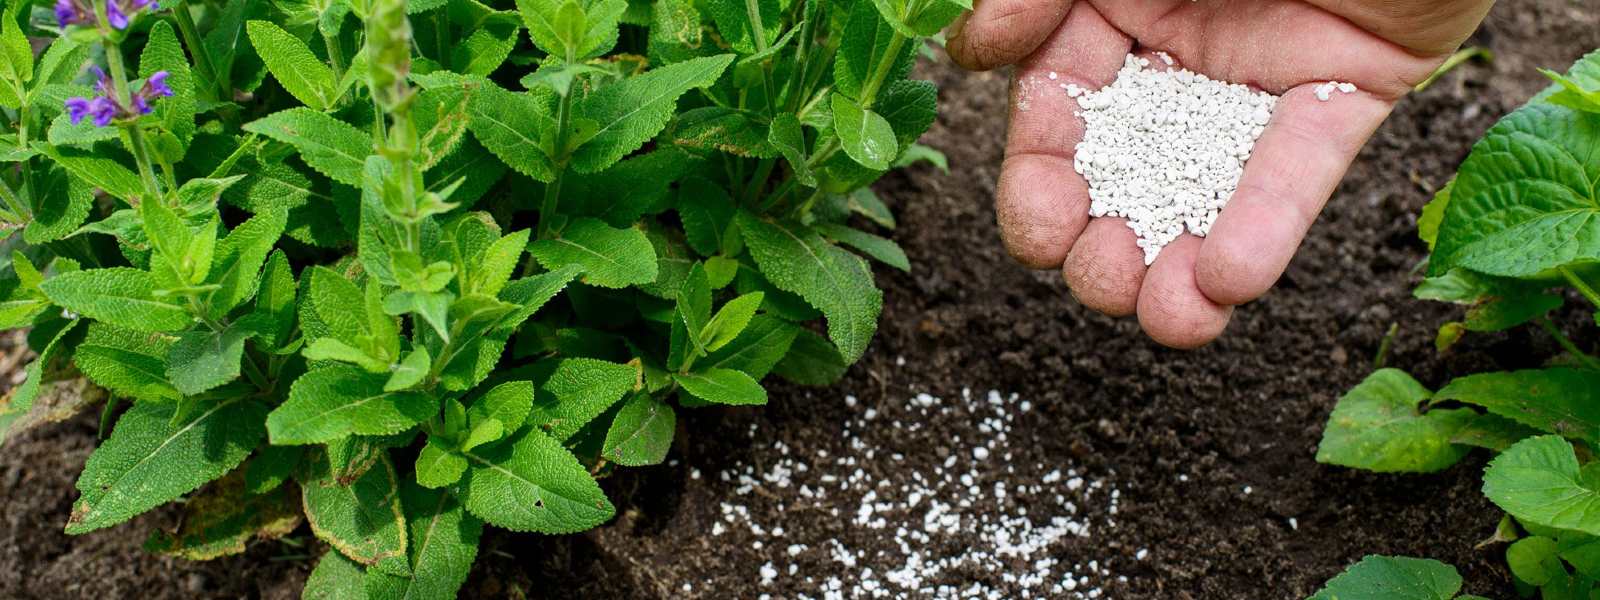 Inquiry into Organic Fertilizer Imports